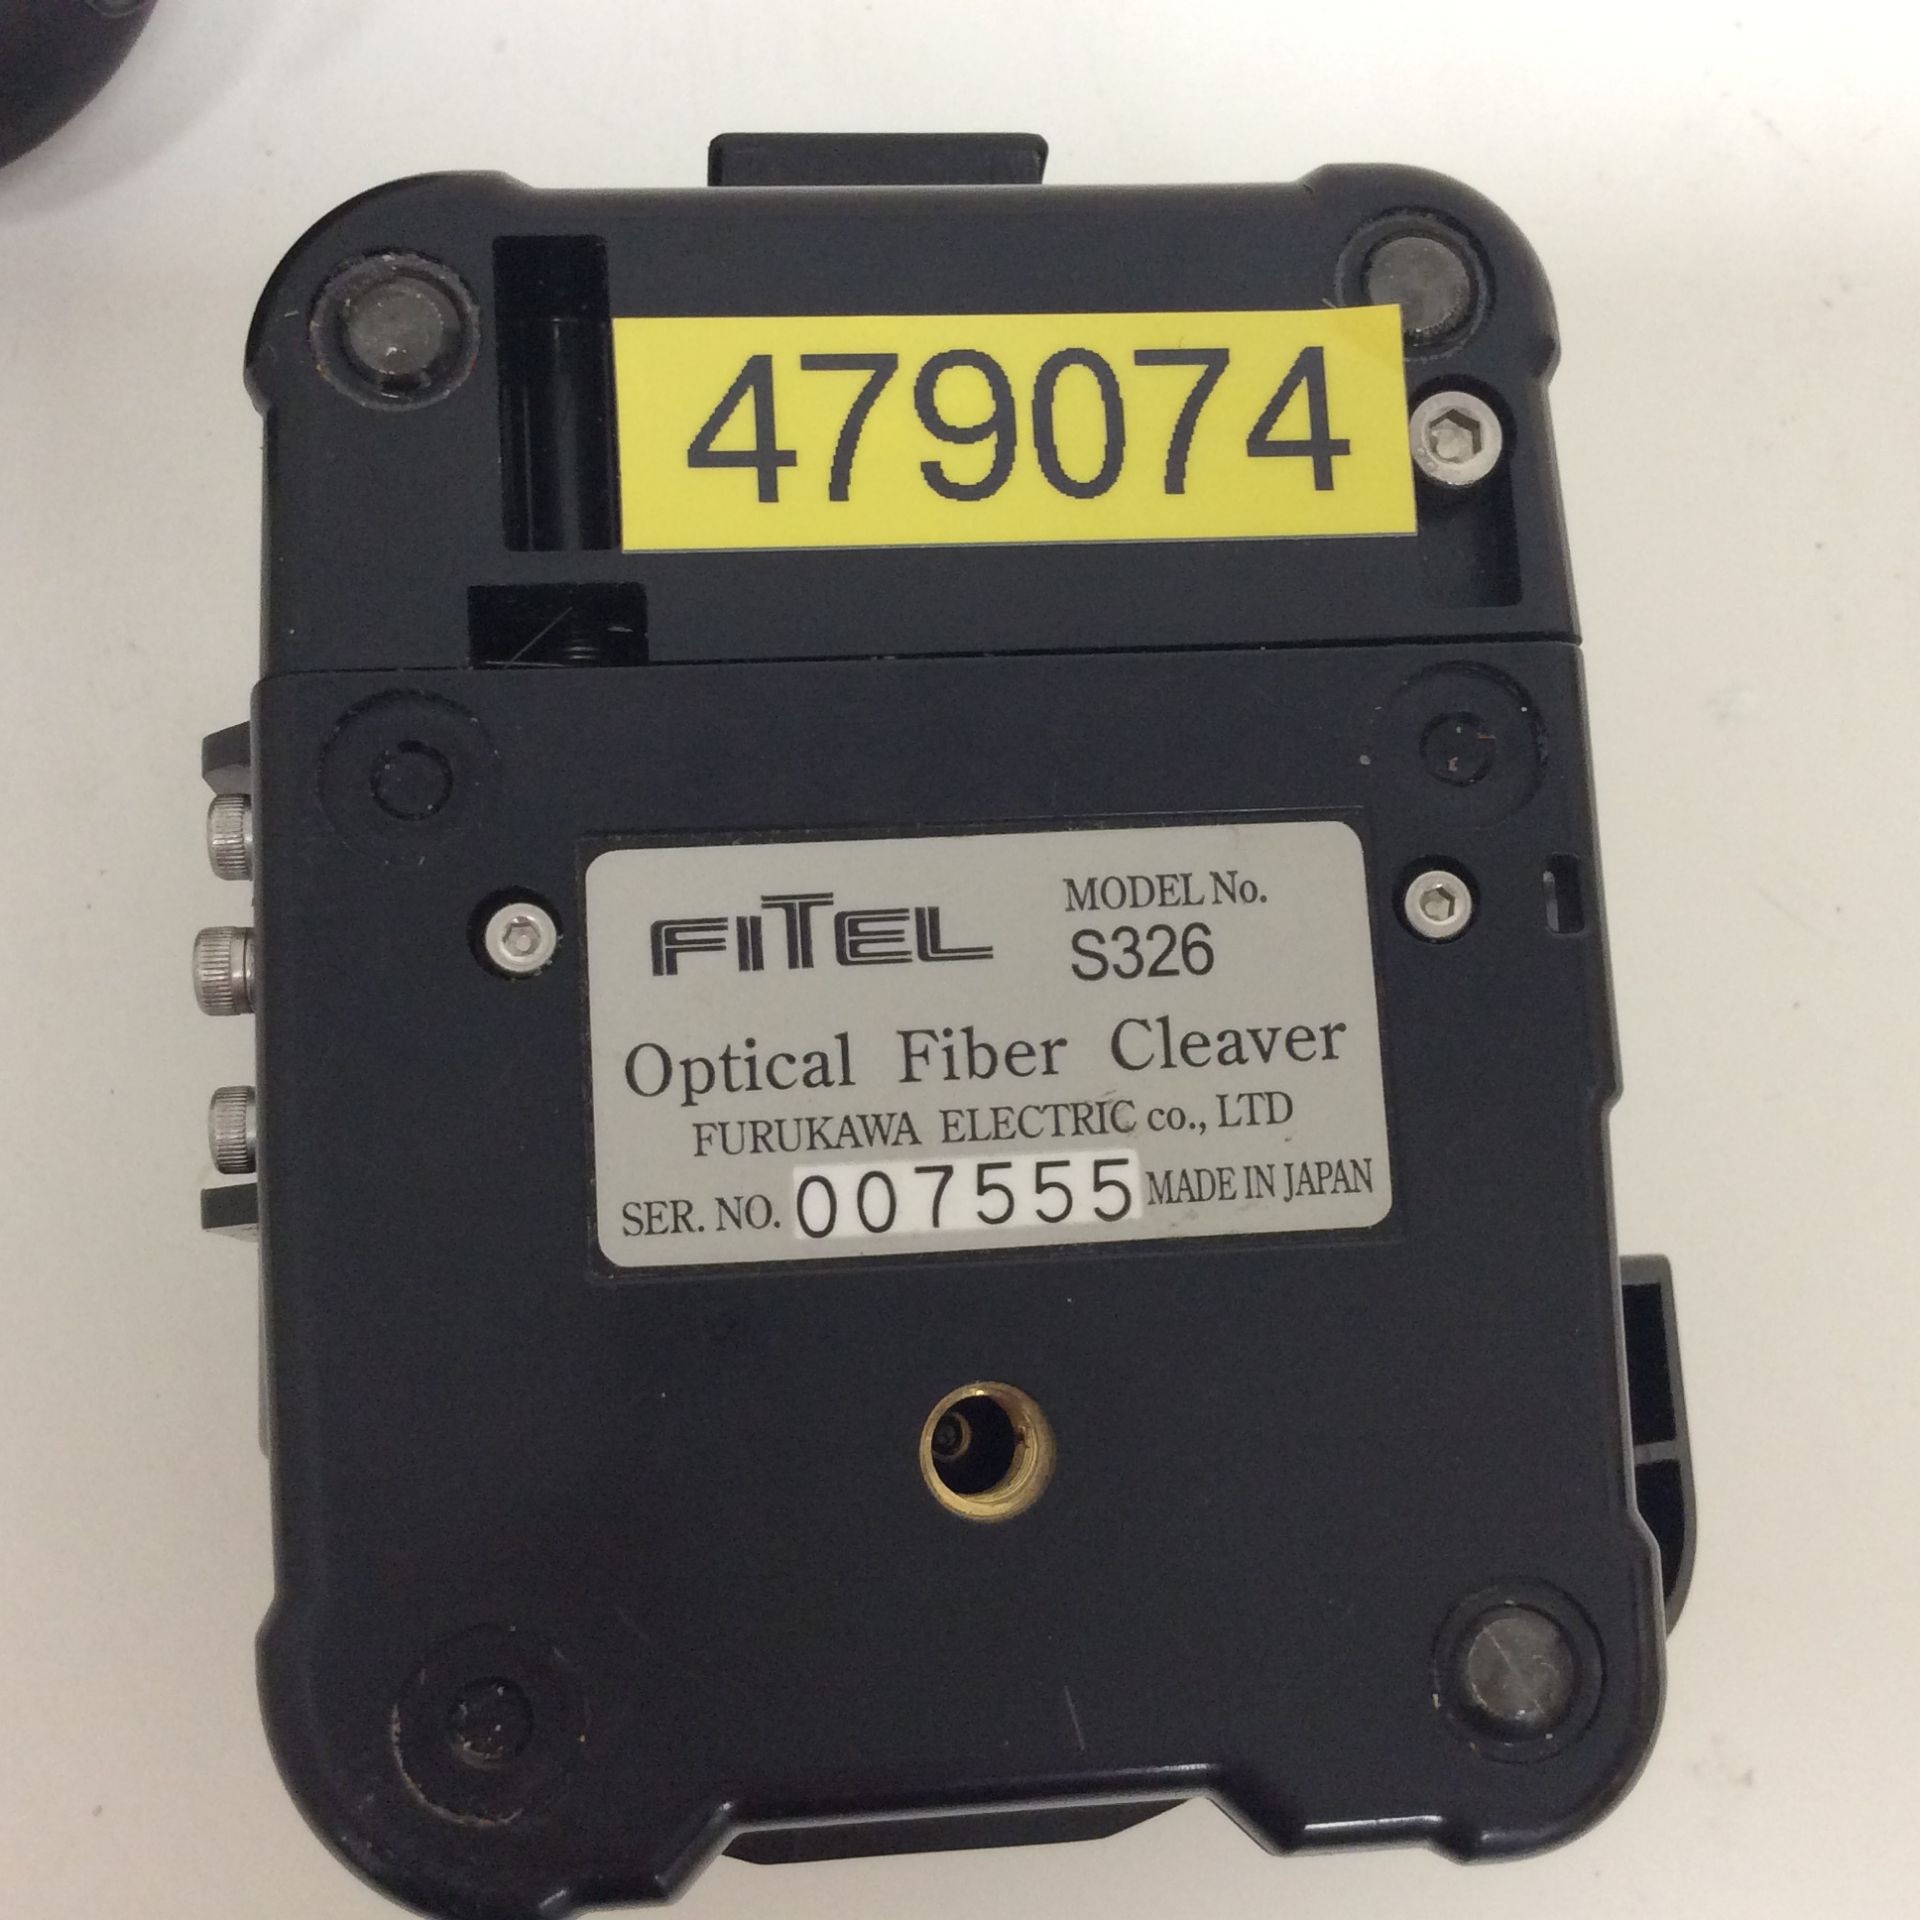 Fitel optical fiber cleaver – model s326 - Image 2 of 2